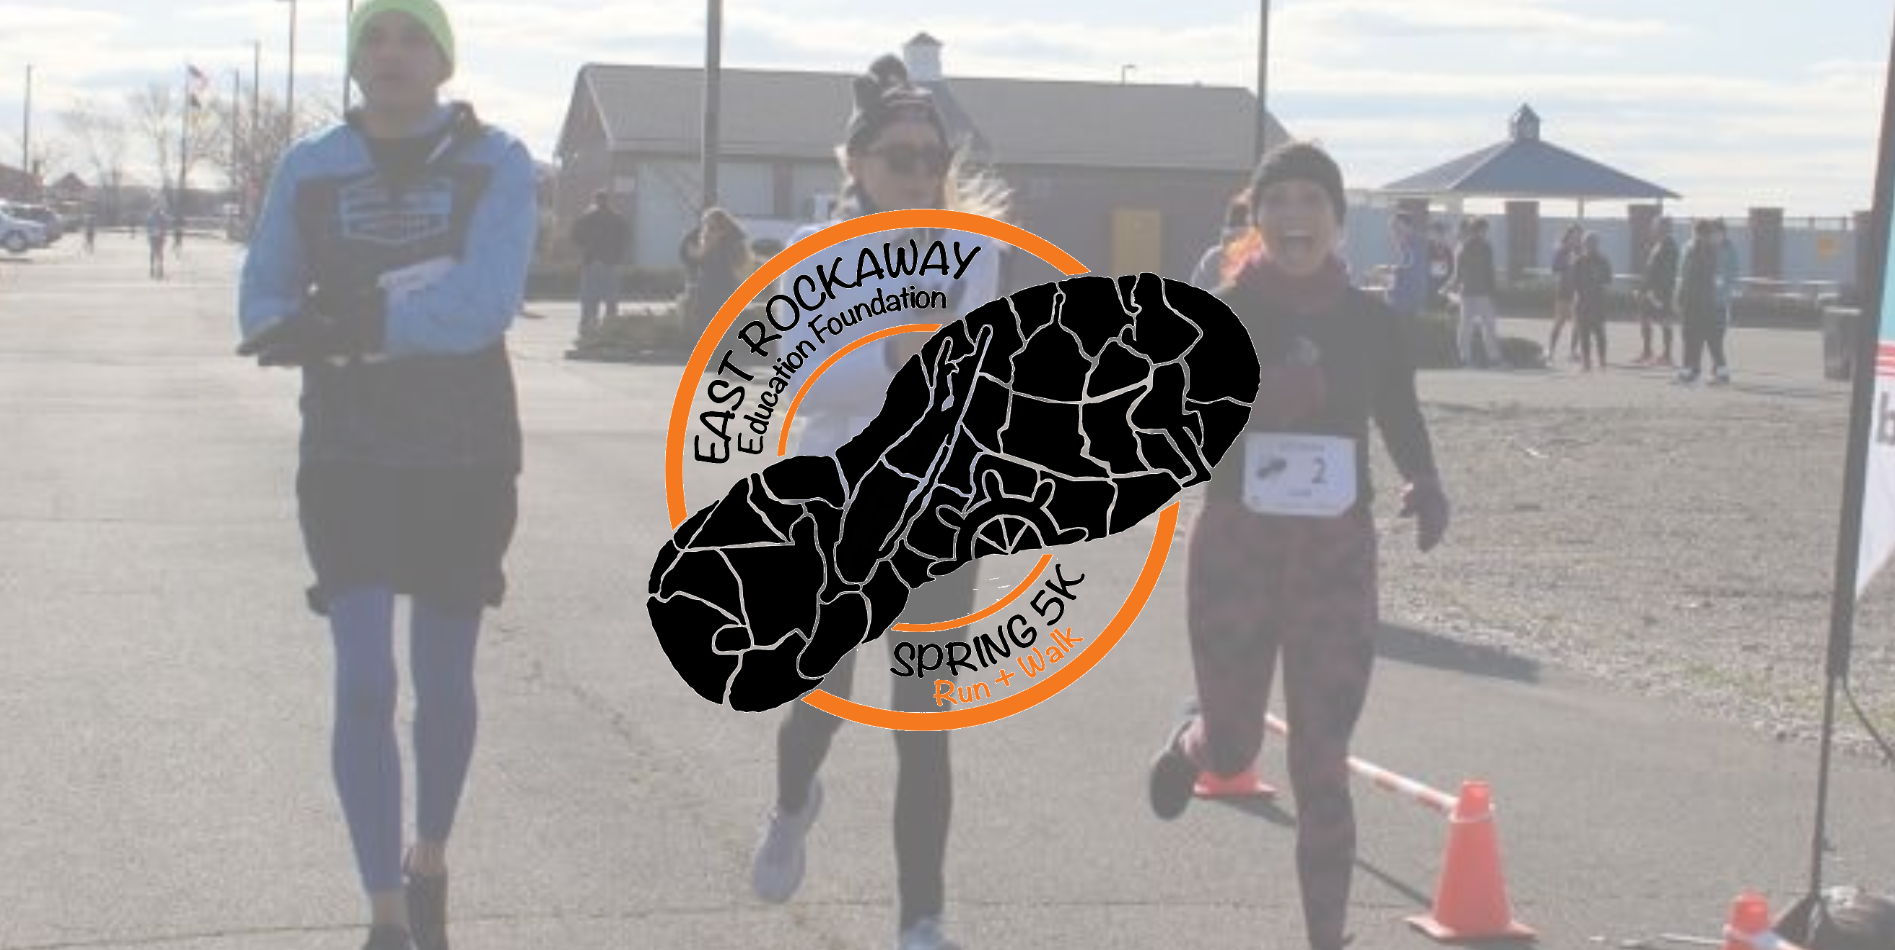 East Rockaway Education Foundation  5K Run/Walk promotional image